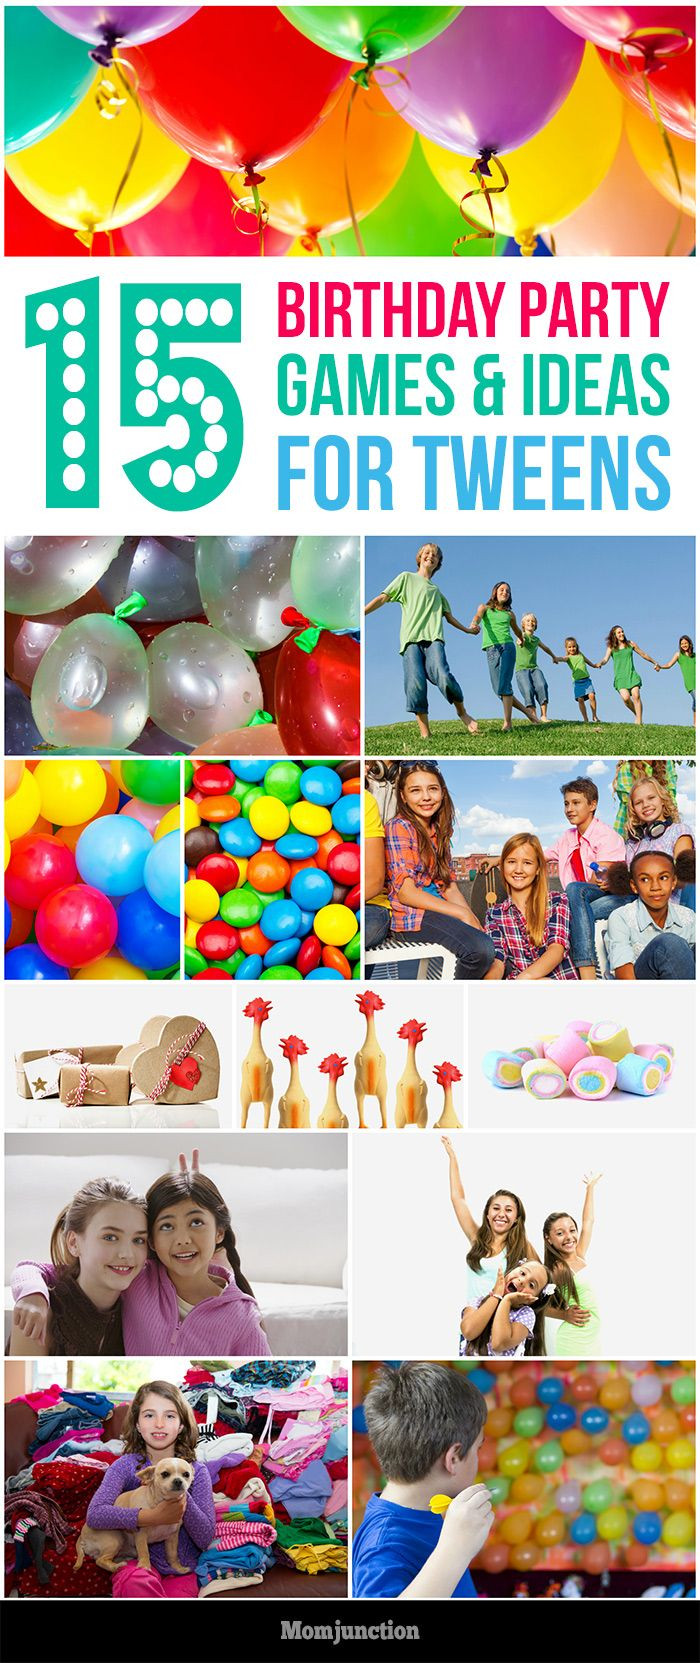 Fun Birthday Party Ideas For Teens
 21 Fun Filled Tween Birthday Party Ideas And Games